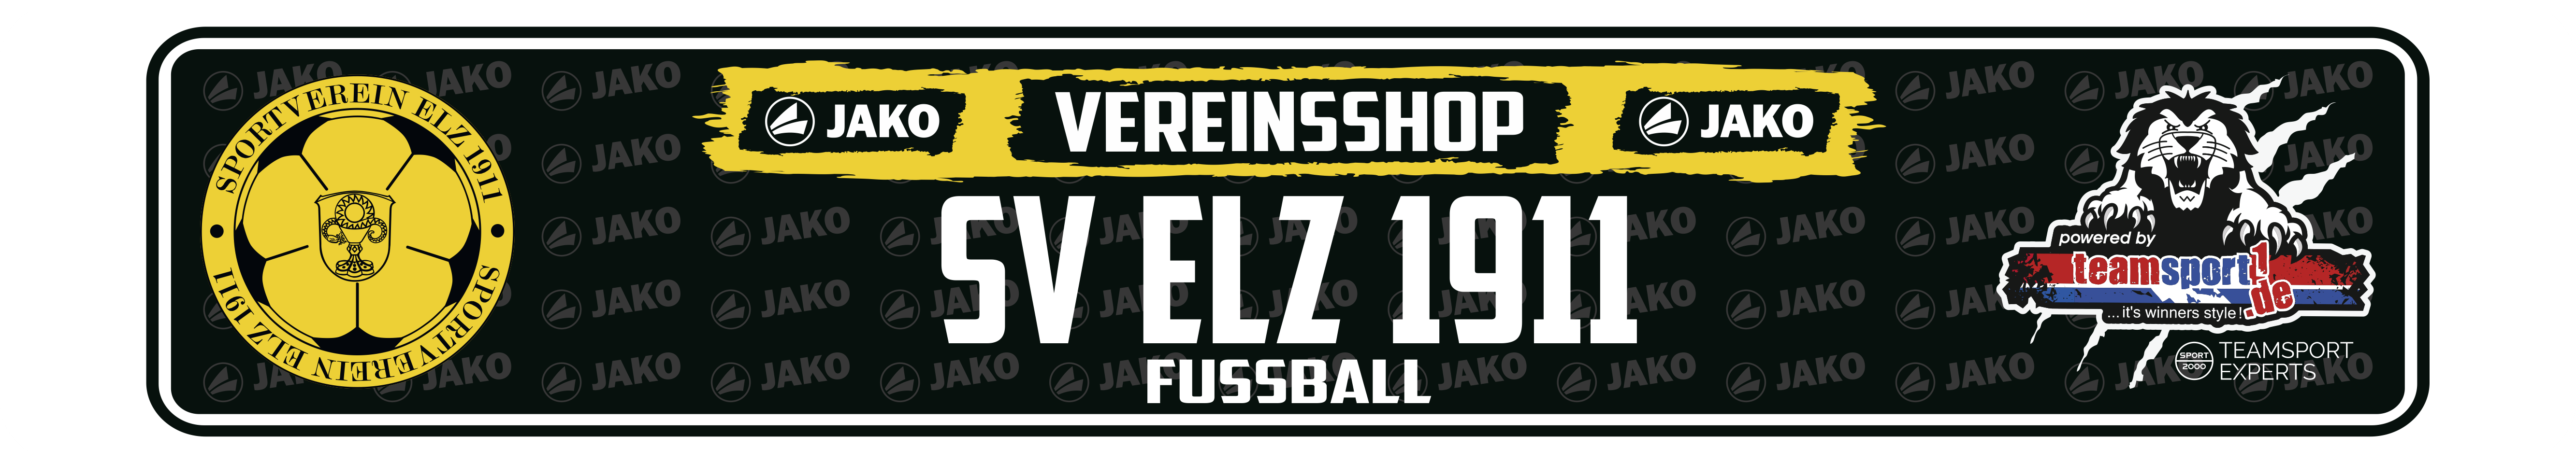 SV Elz Fussball Title Image